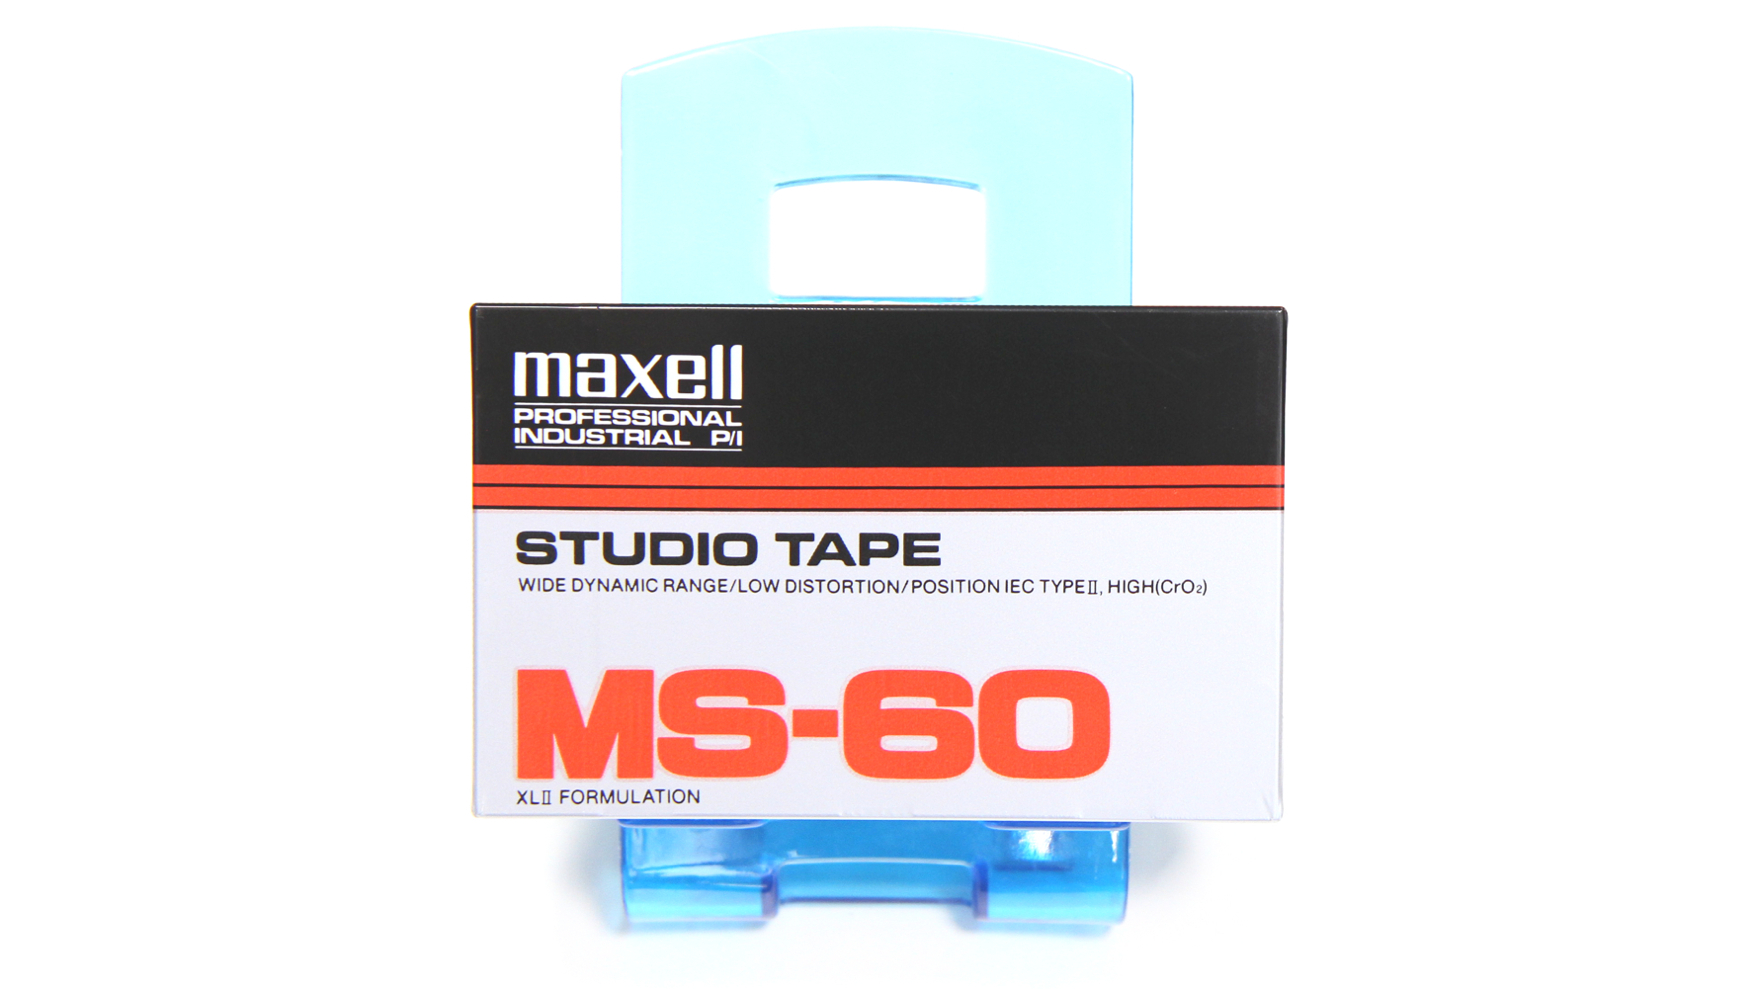 MAXELL MS-60 Studio Tape